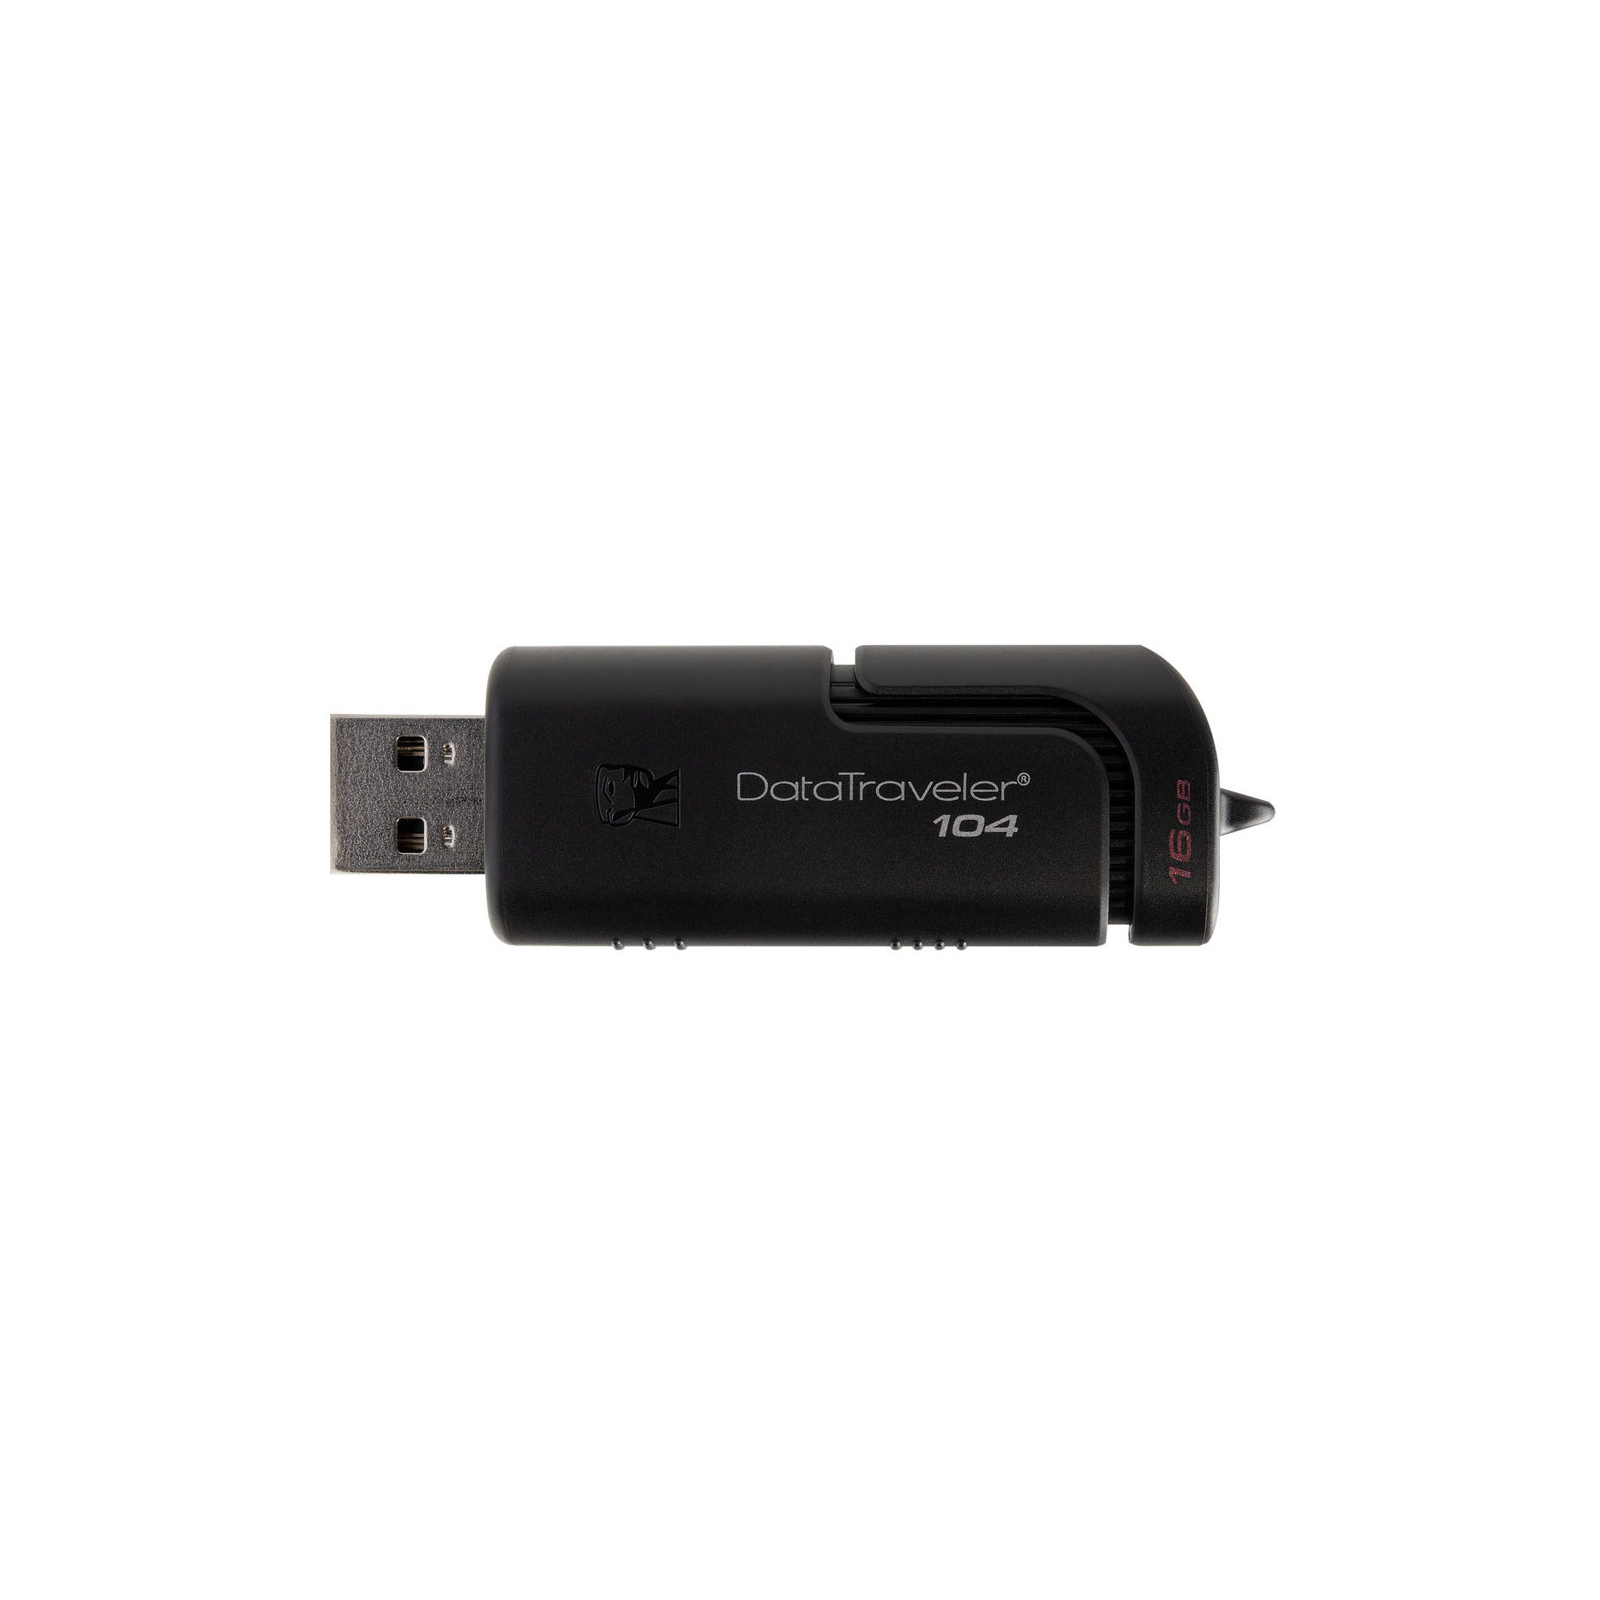 USB флеш накопитель Kingston 16GB DataTraveller 104 Black USB 2.0 (DT104/16GB) изображение 4